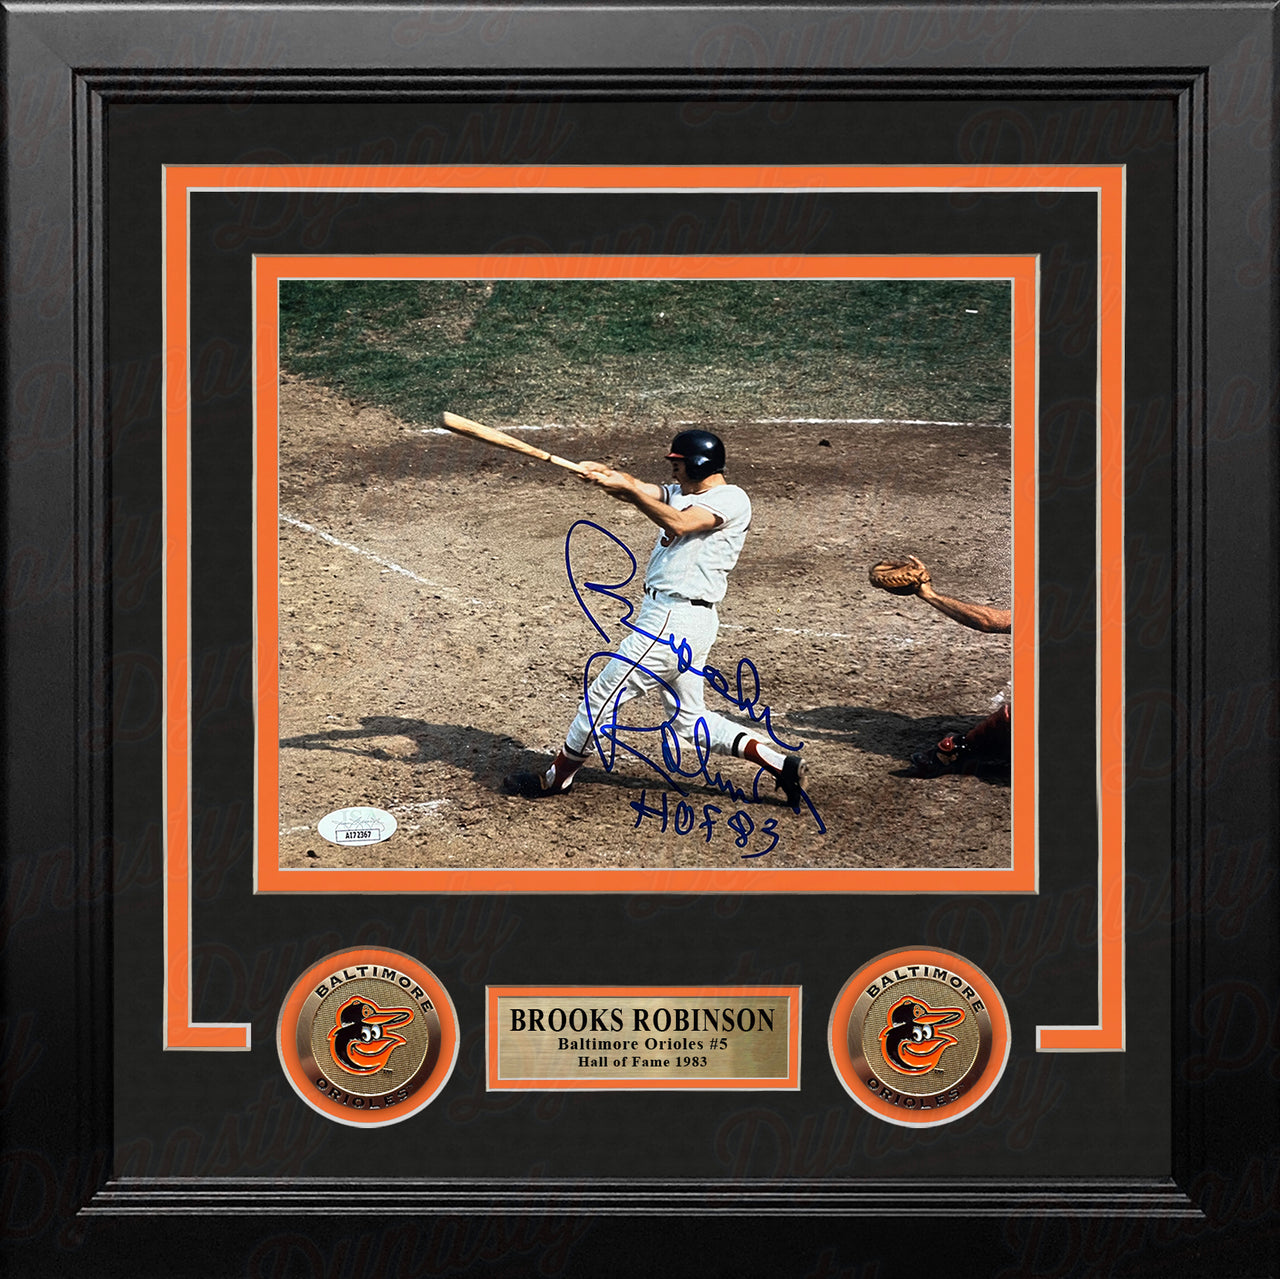 Lids Adley Rutschman Baltimore Orioles Fanatics Authentic Autographed  Baseball & Mahogany Baseball Display Case